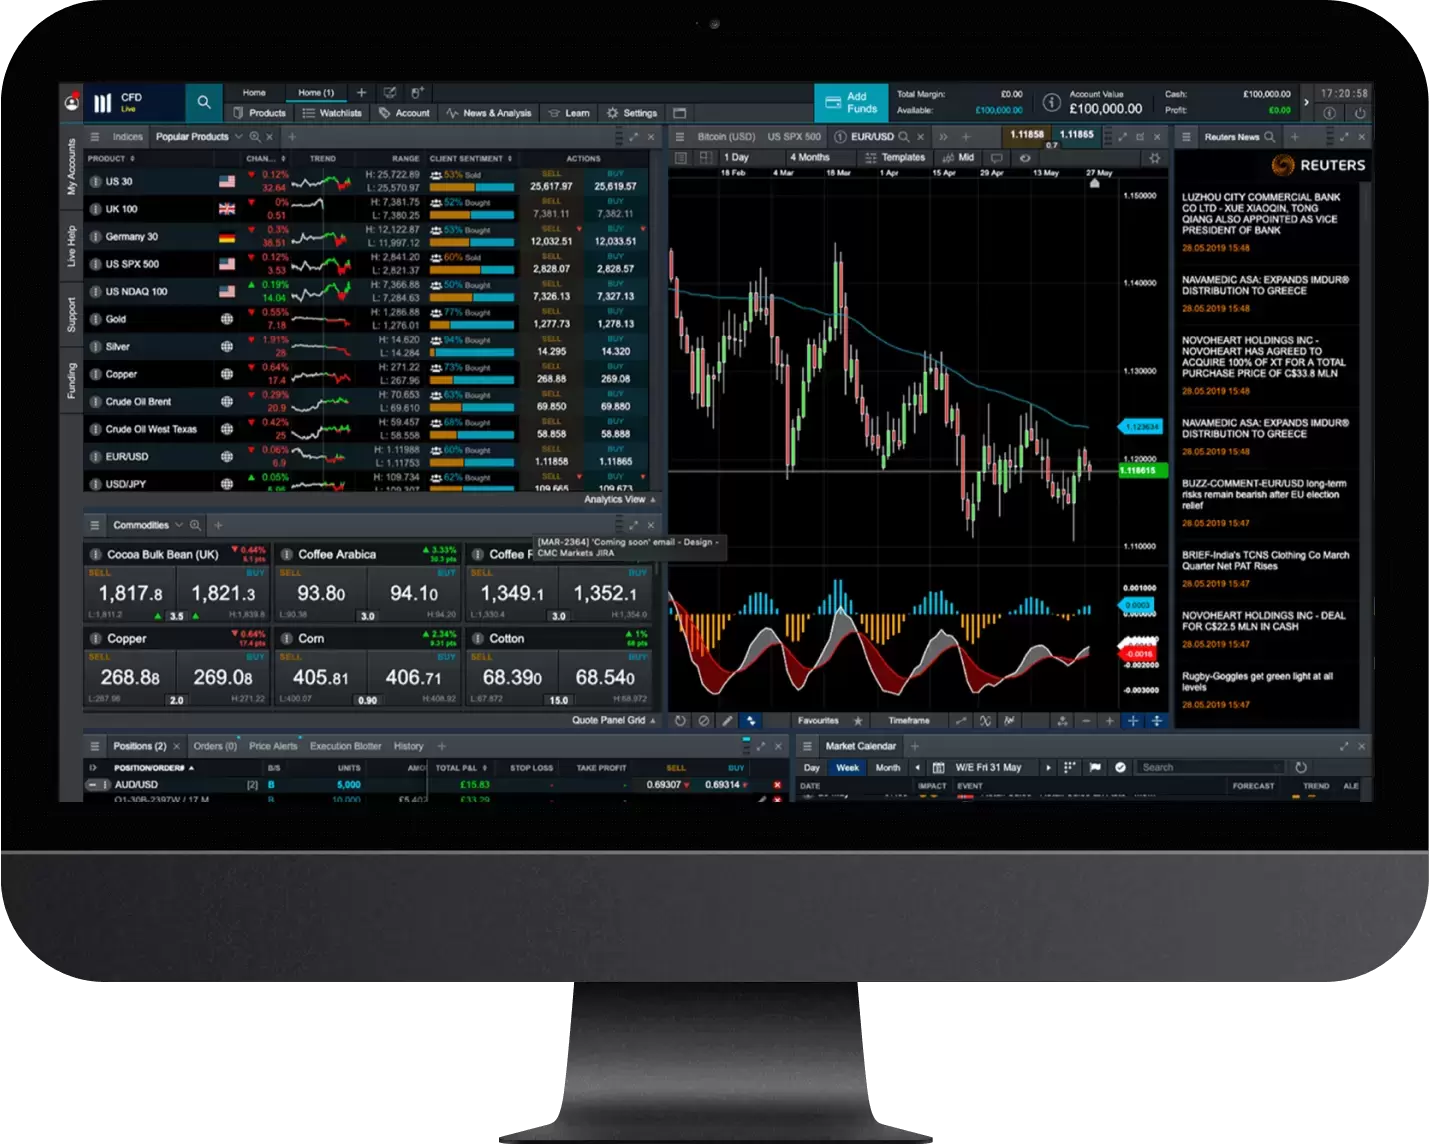 Web based trading platform